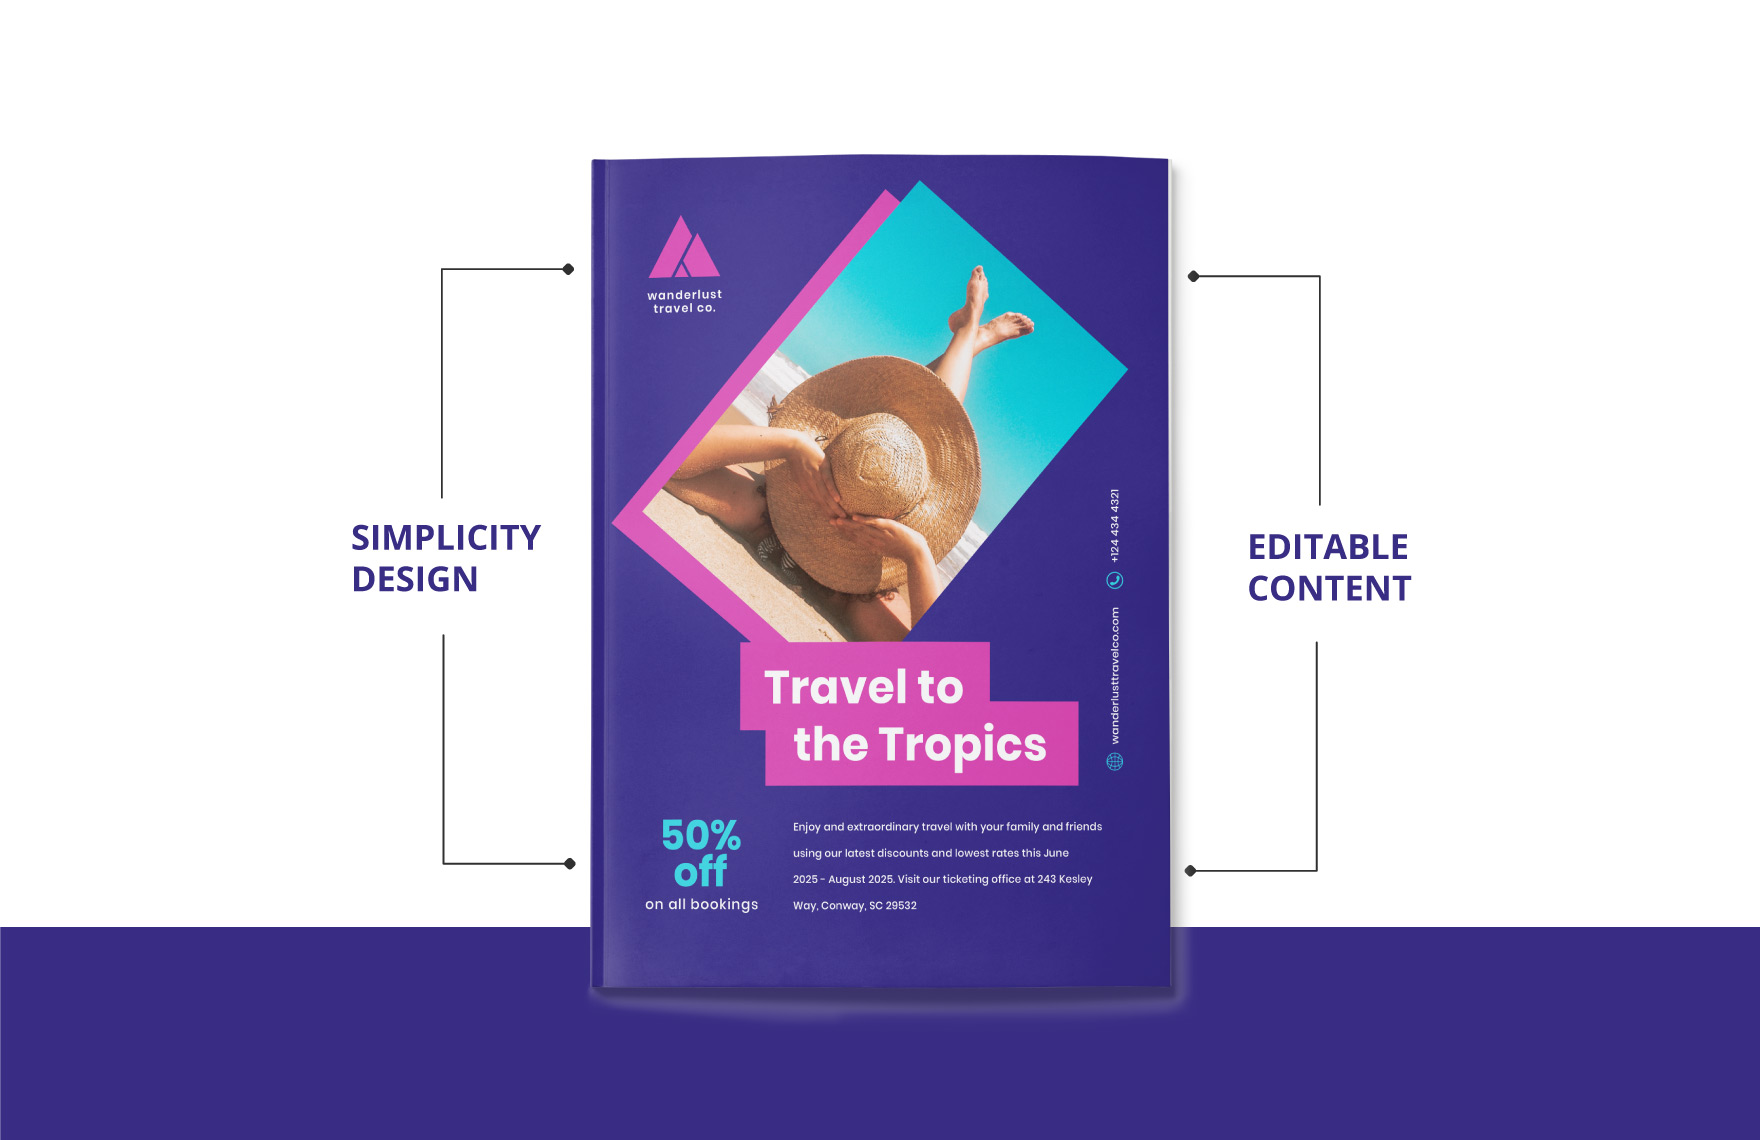 Sample Travel Magazine Ads Template